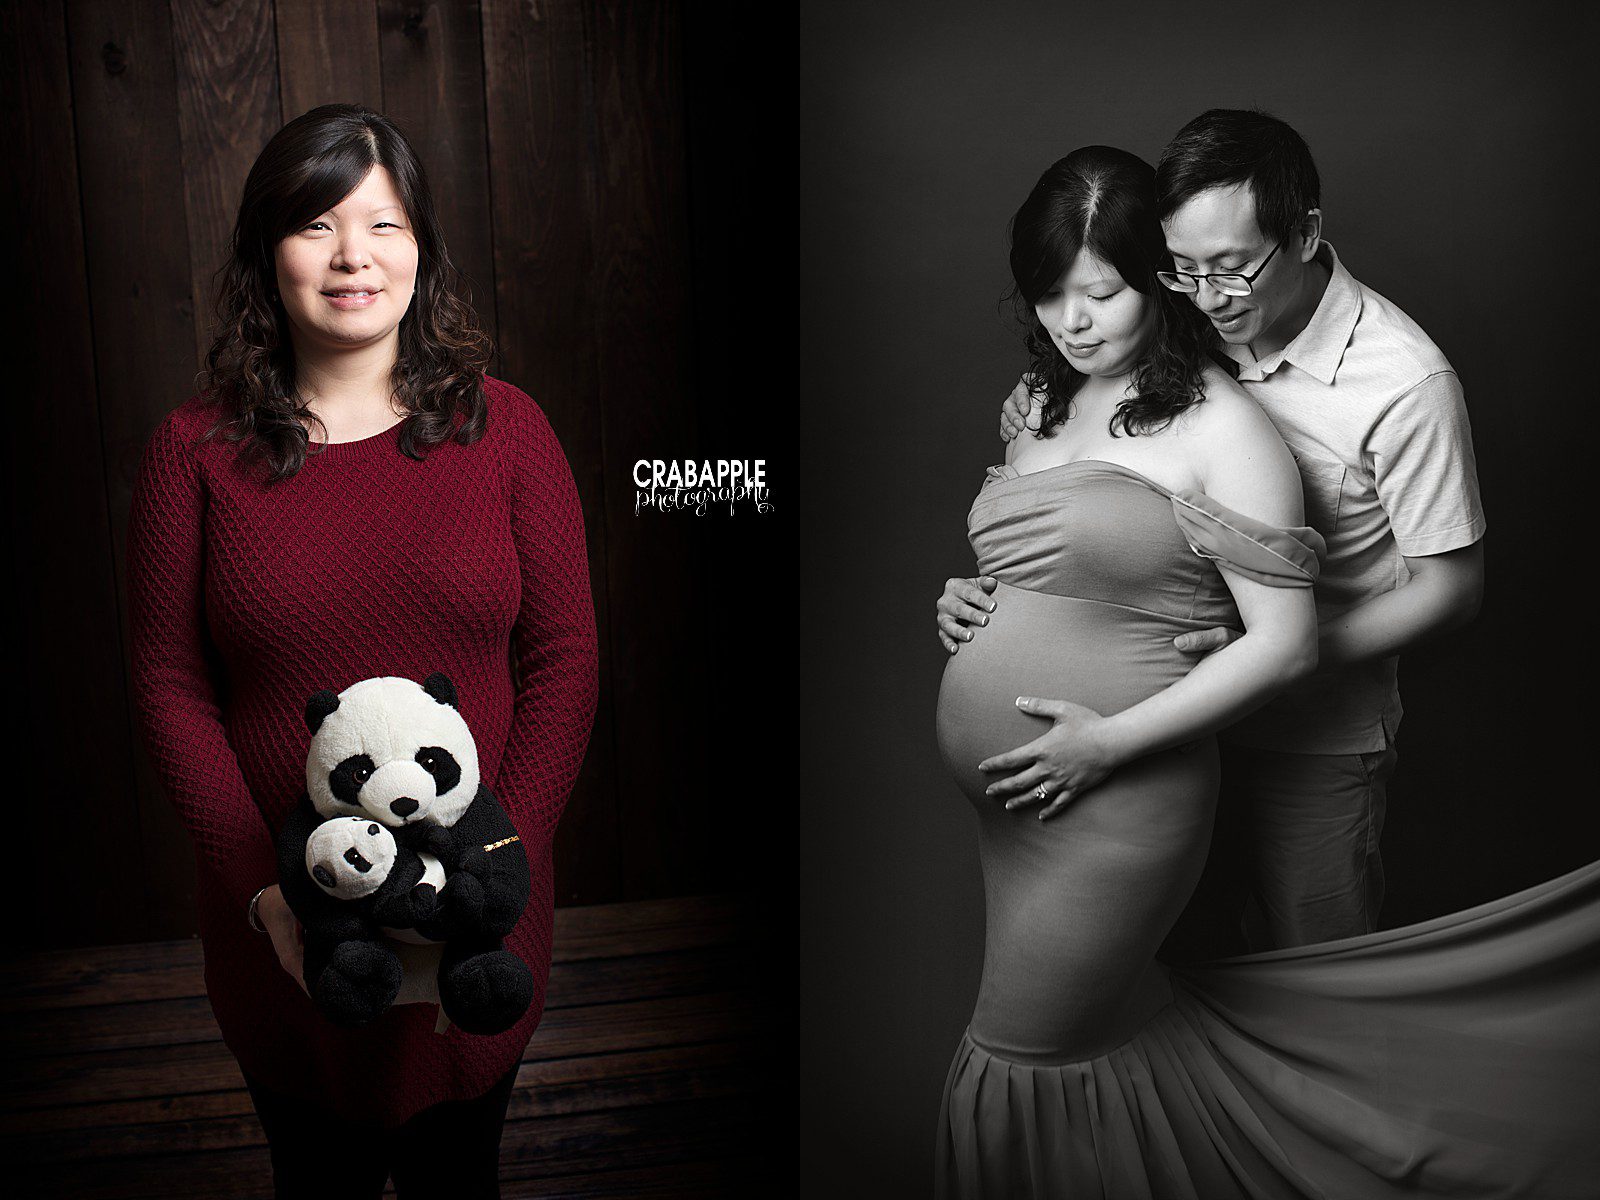 arlington ma maternity photos with props